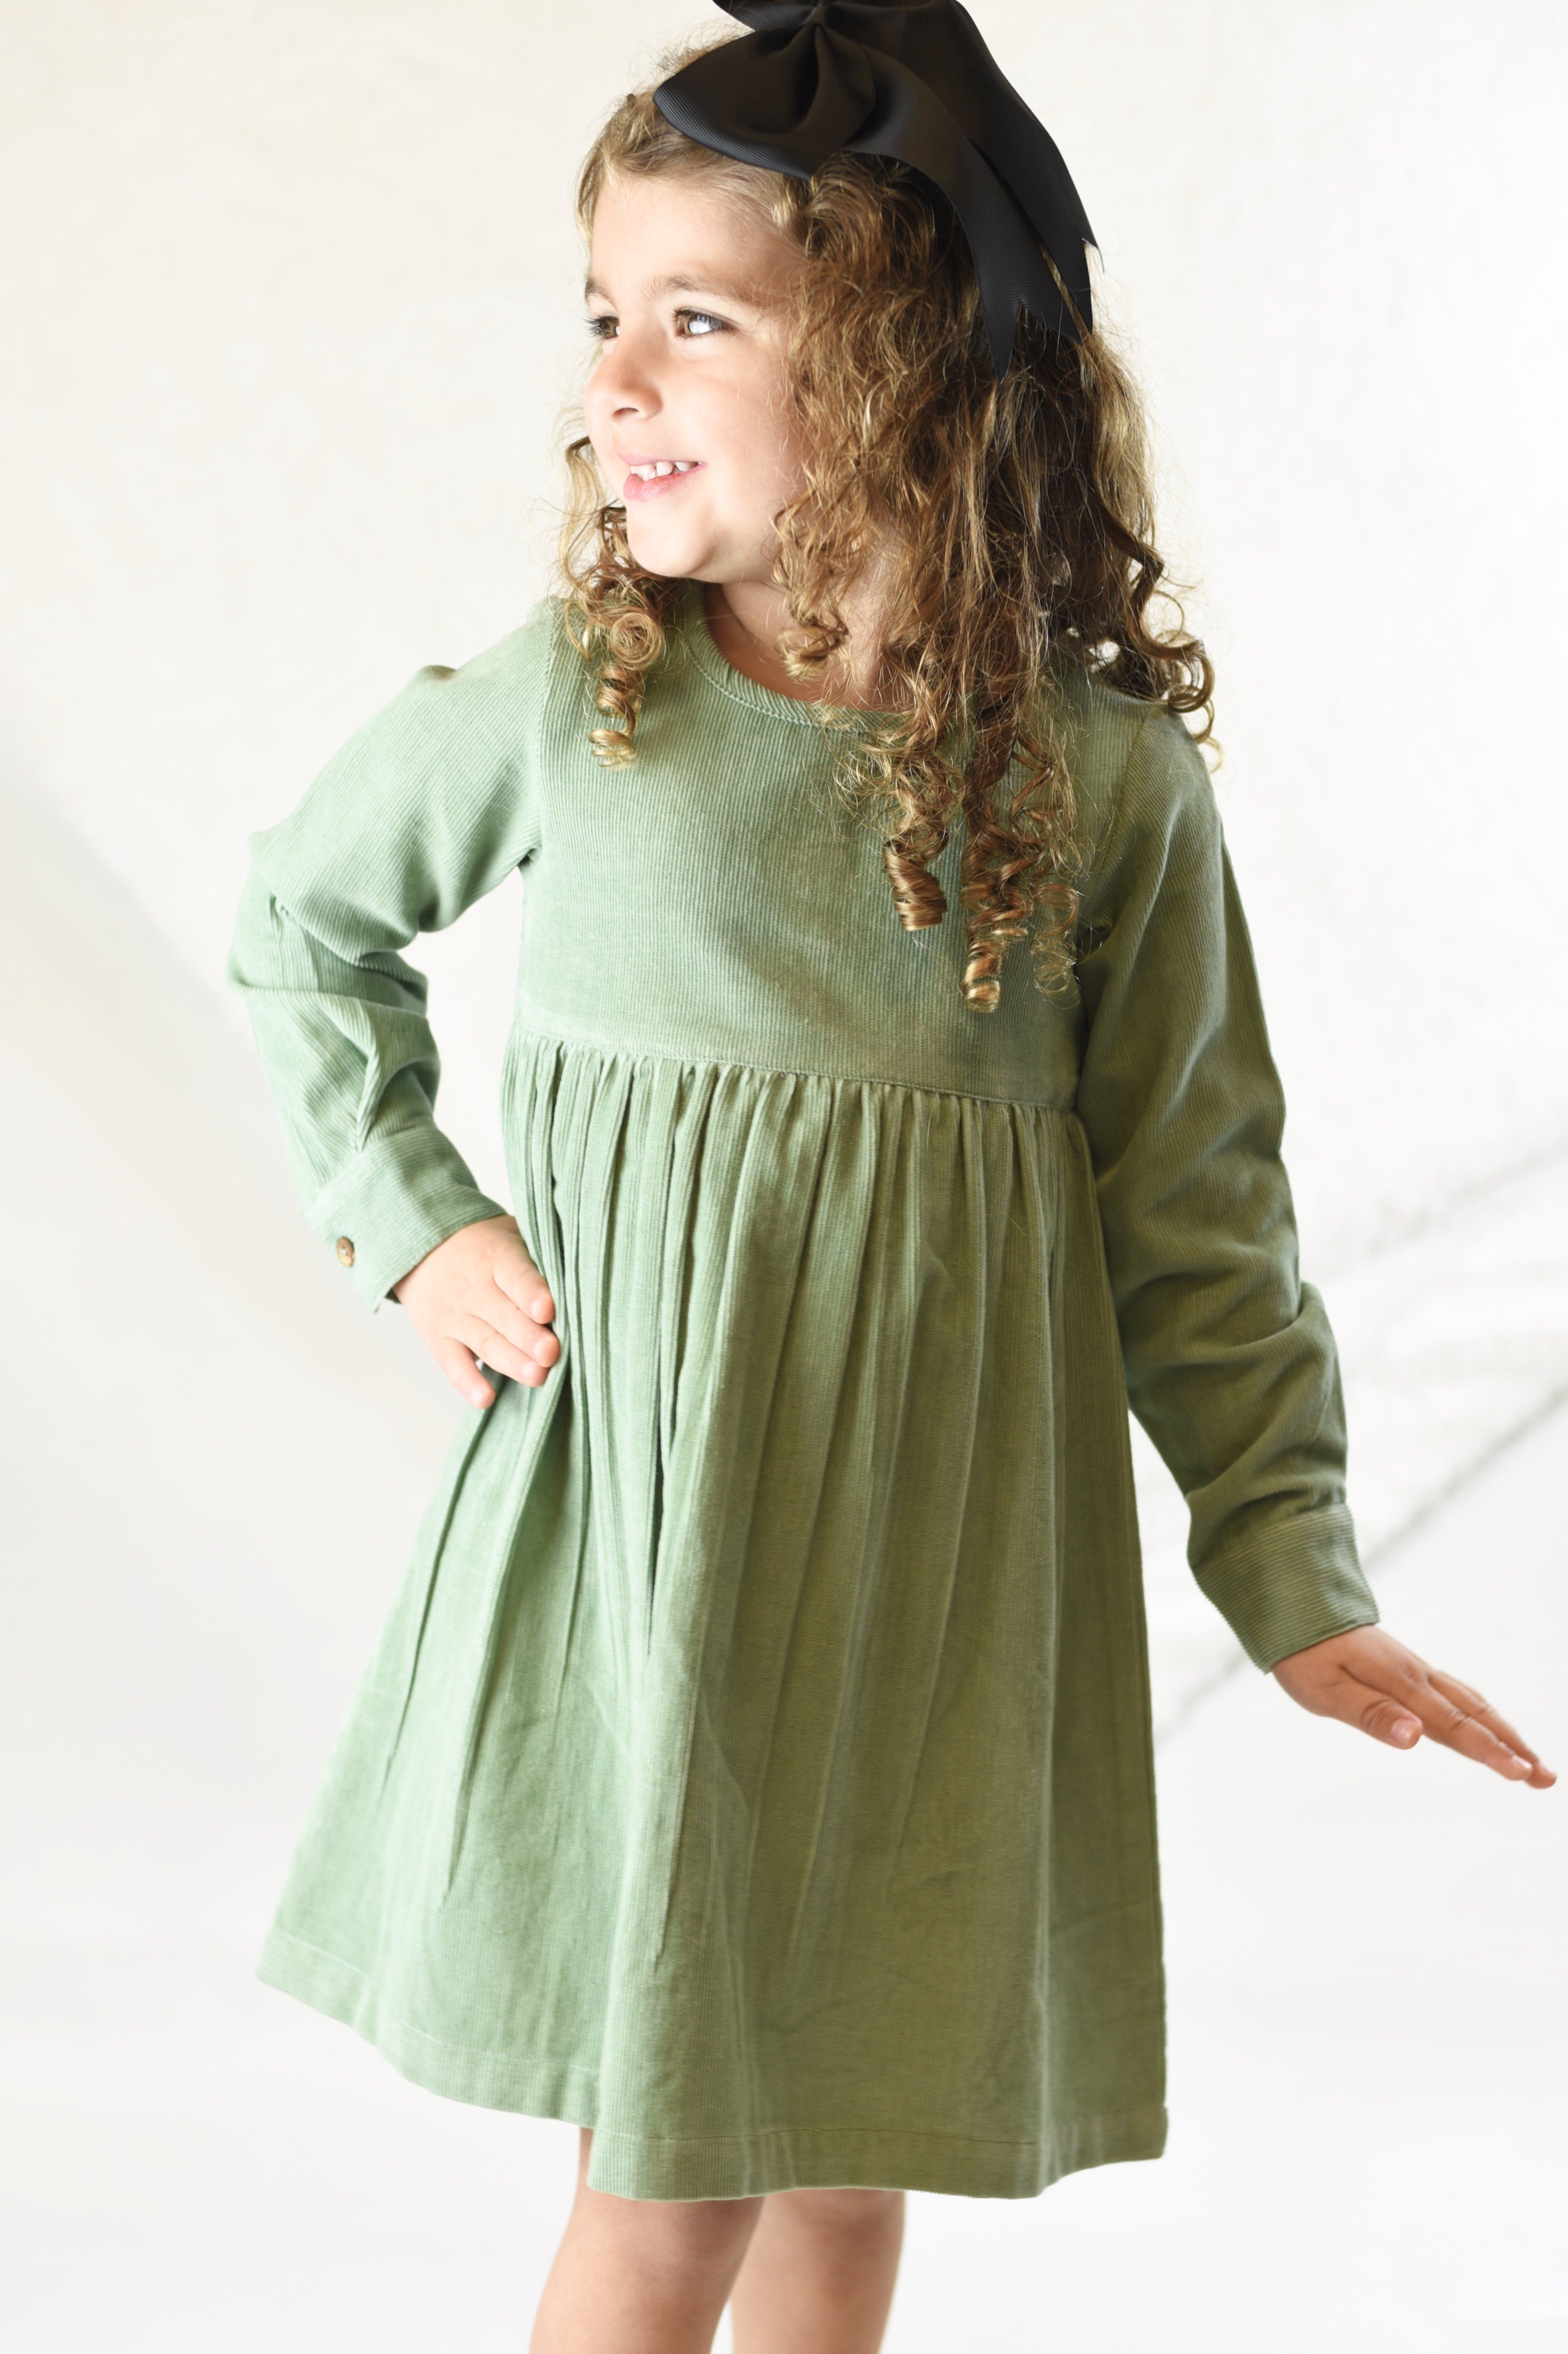 Long Sleeve Flowy Modest Empire Waist Maxi Dress Gown Abaya - NT009 - KOH  KOH® Women's Clothing